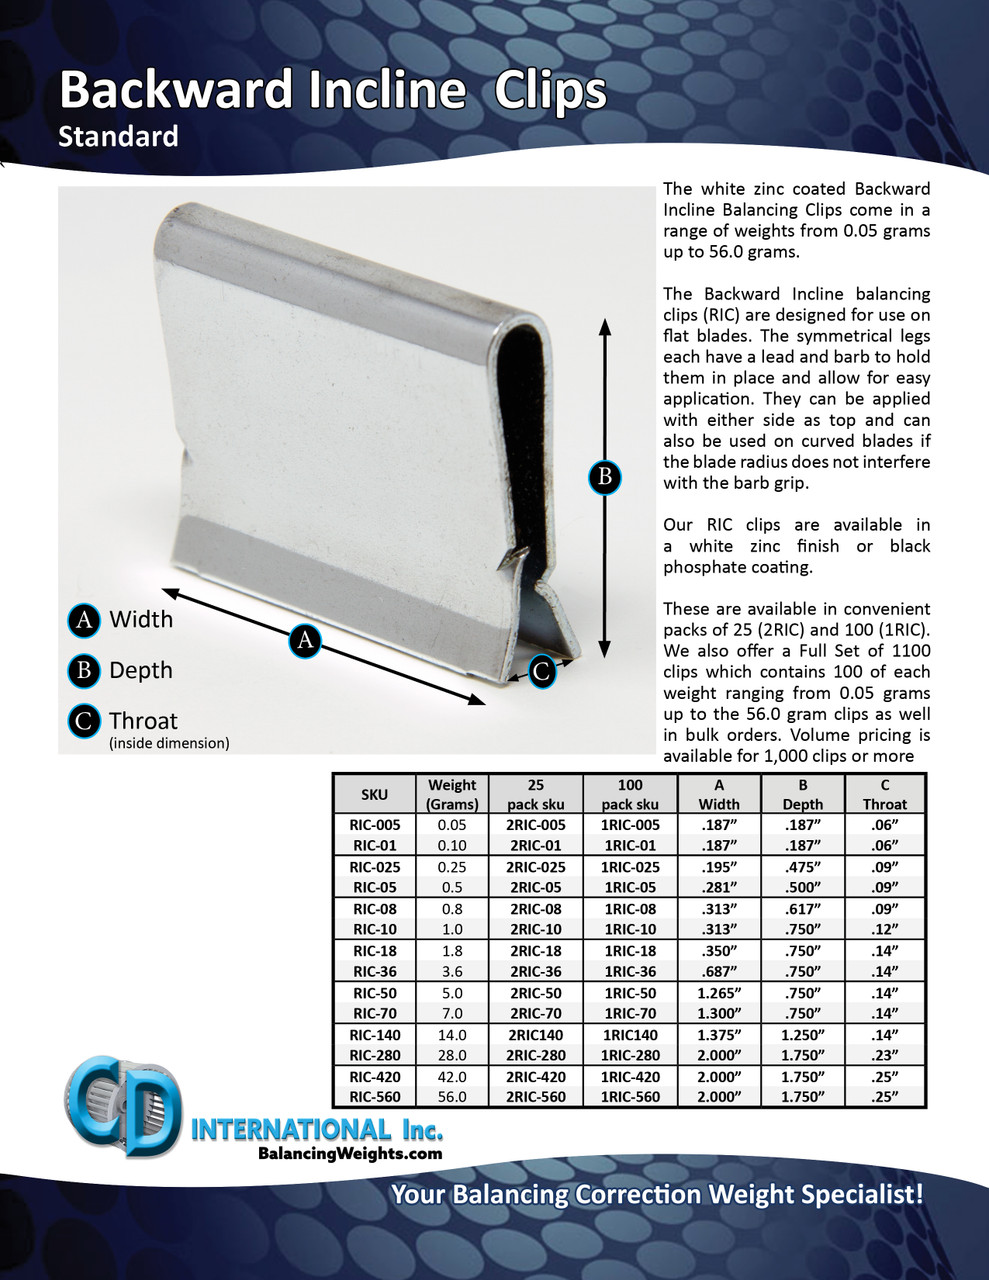 RIC-50 - 5.0 gram Backward Incline clips